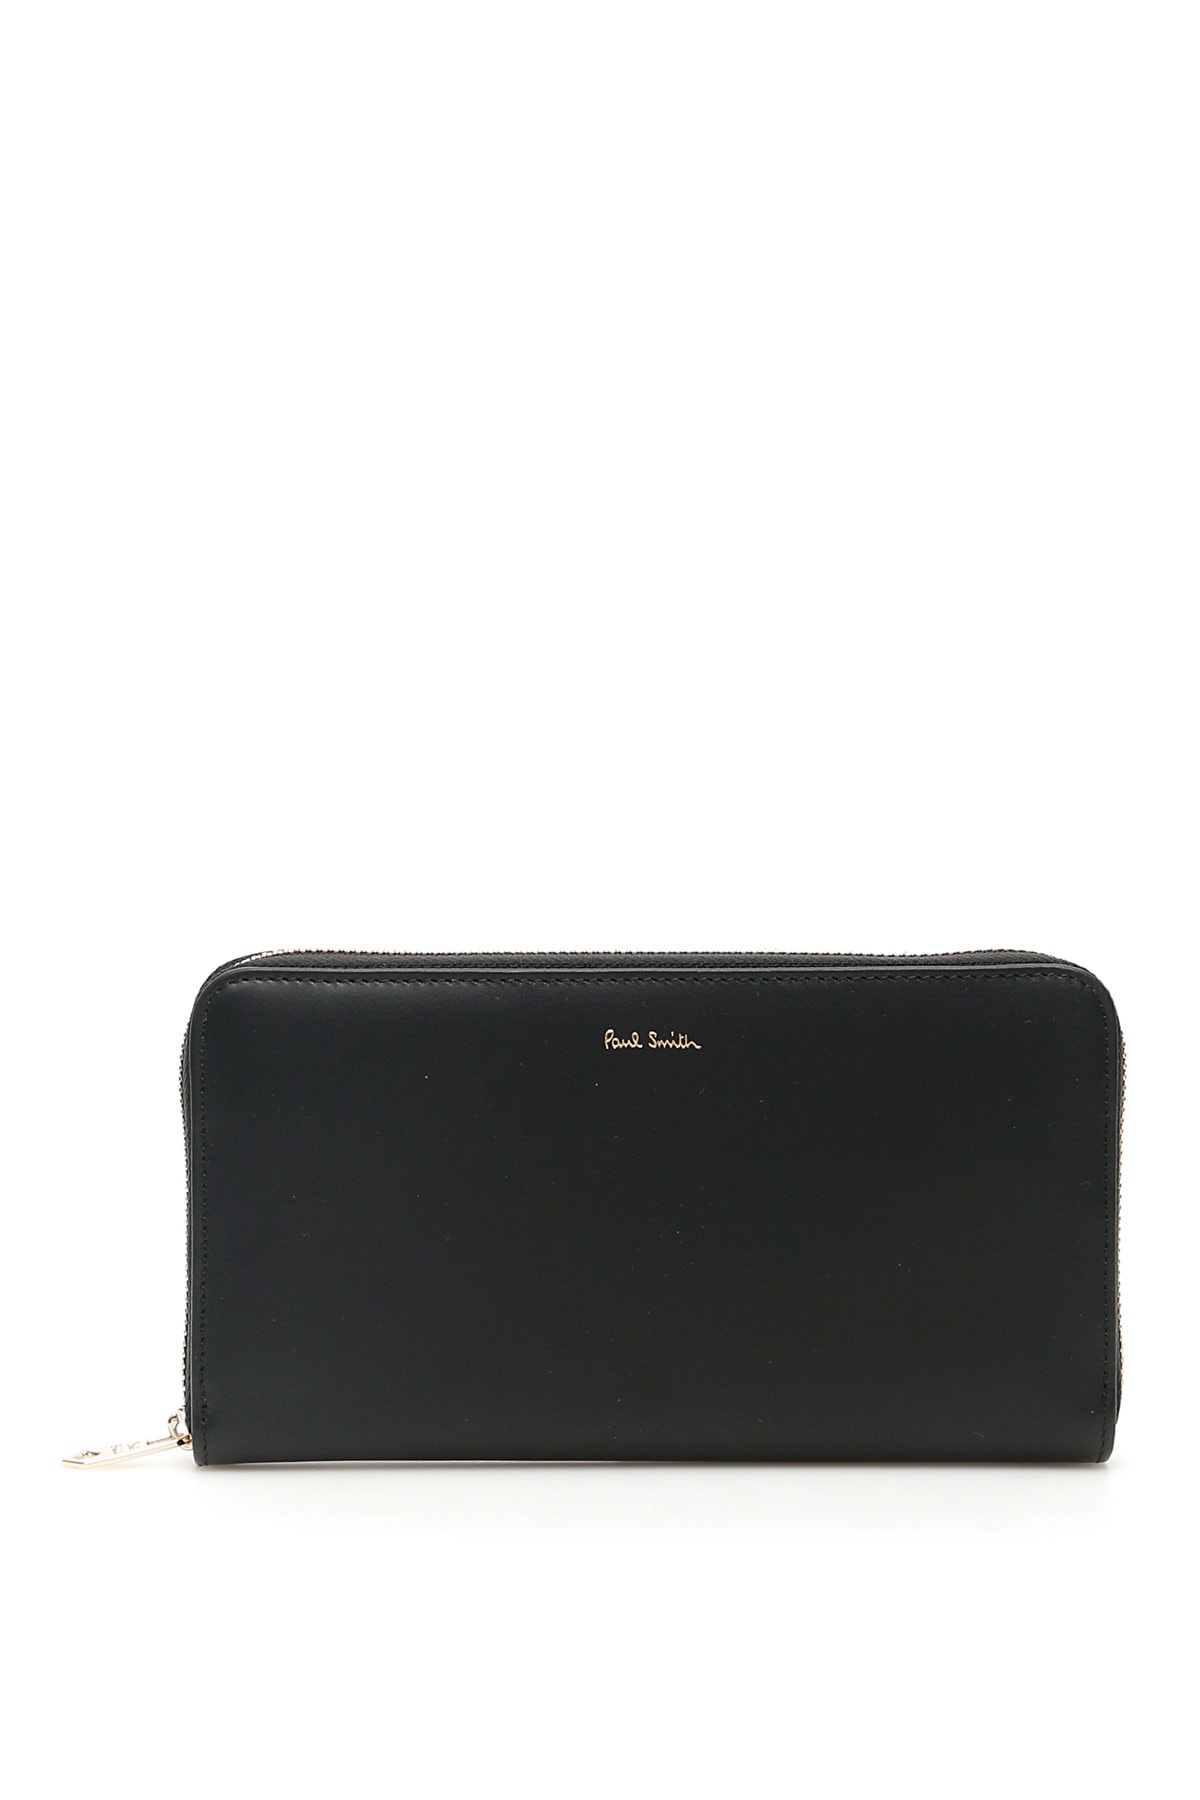 Paul Smith Leather Zip-around Wallet In Black (black)